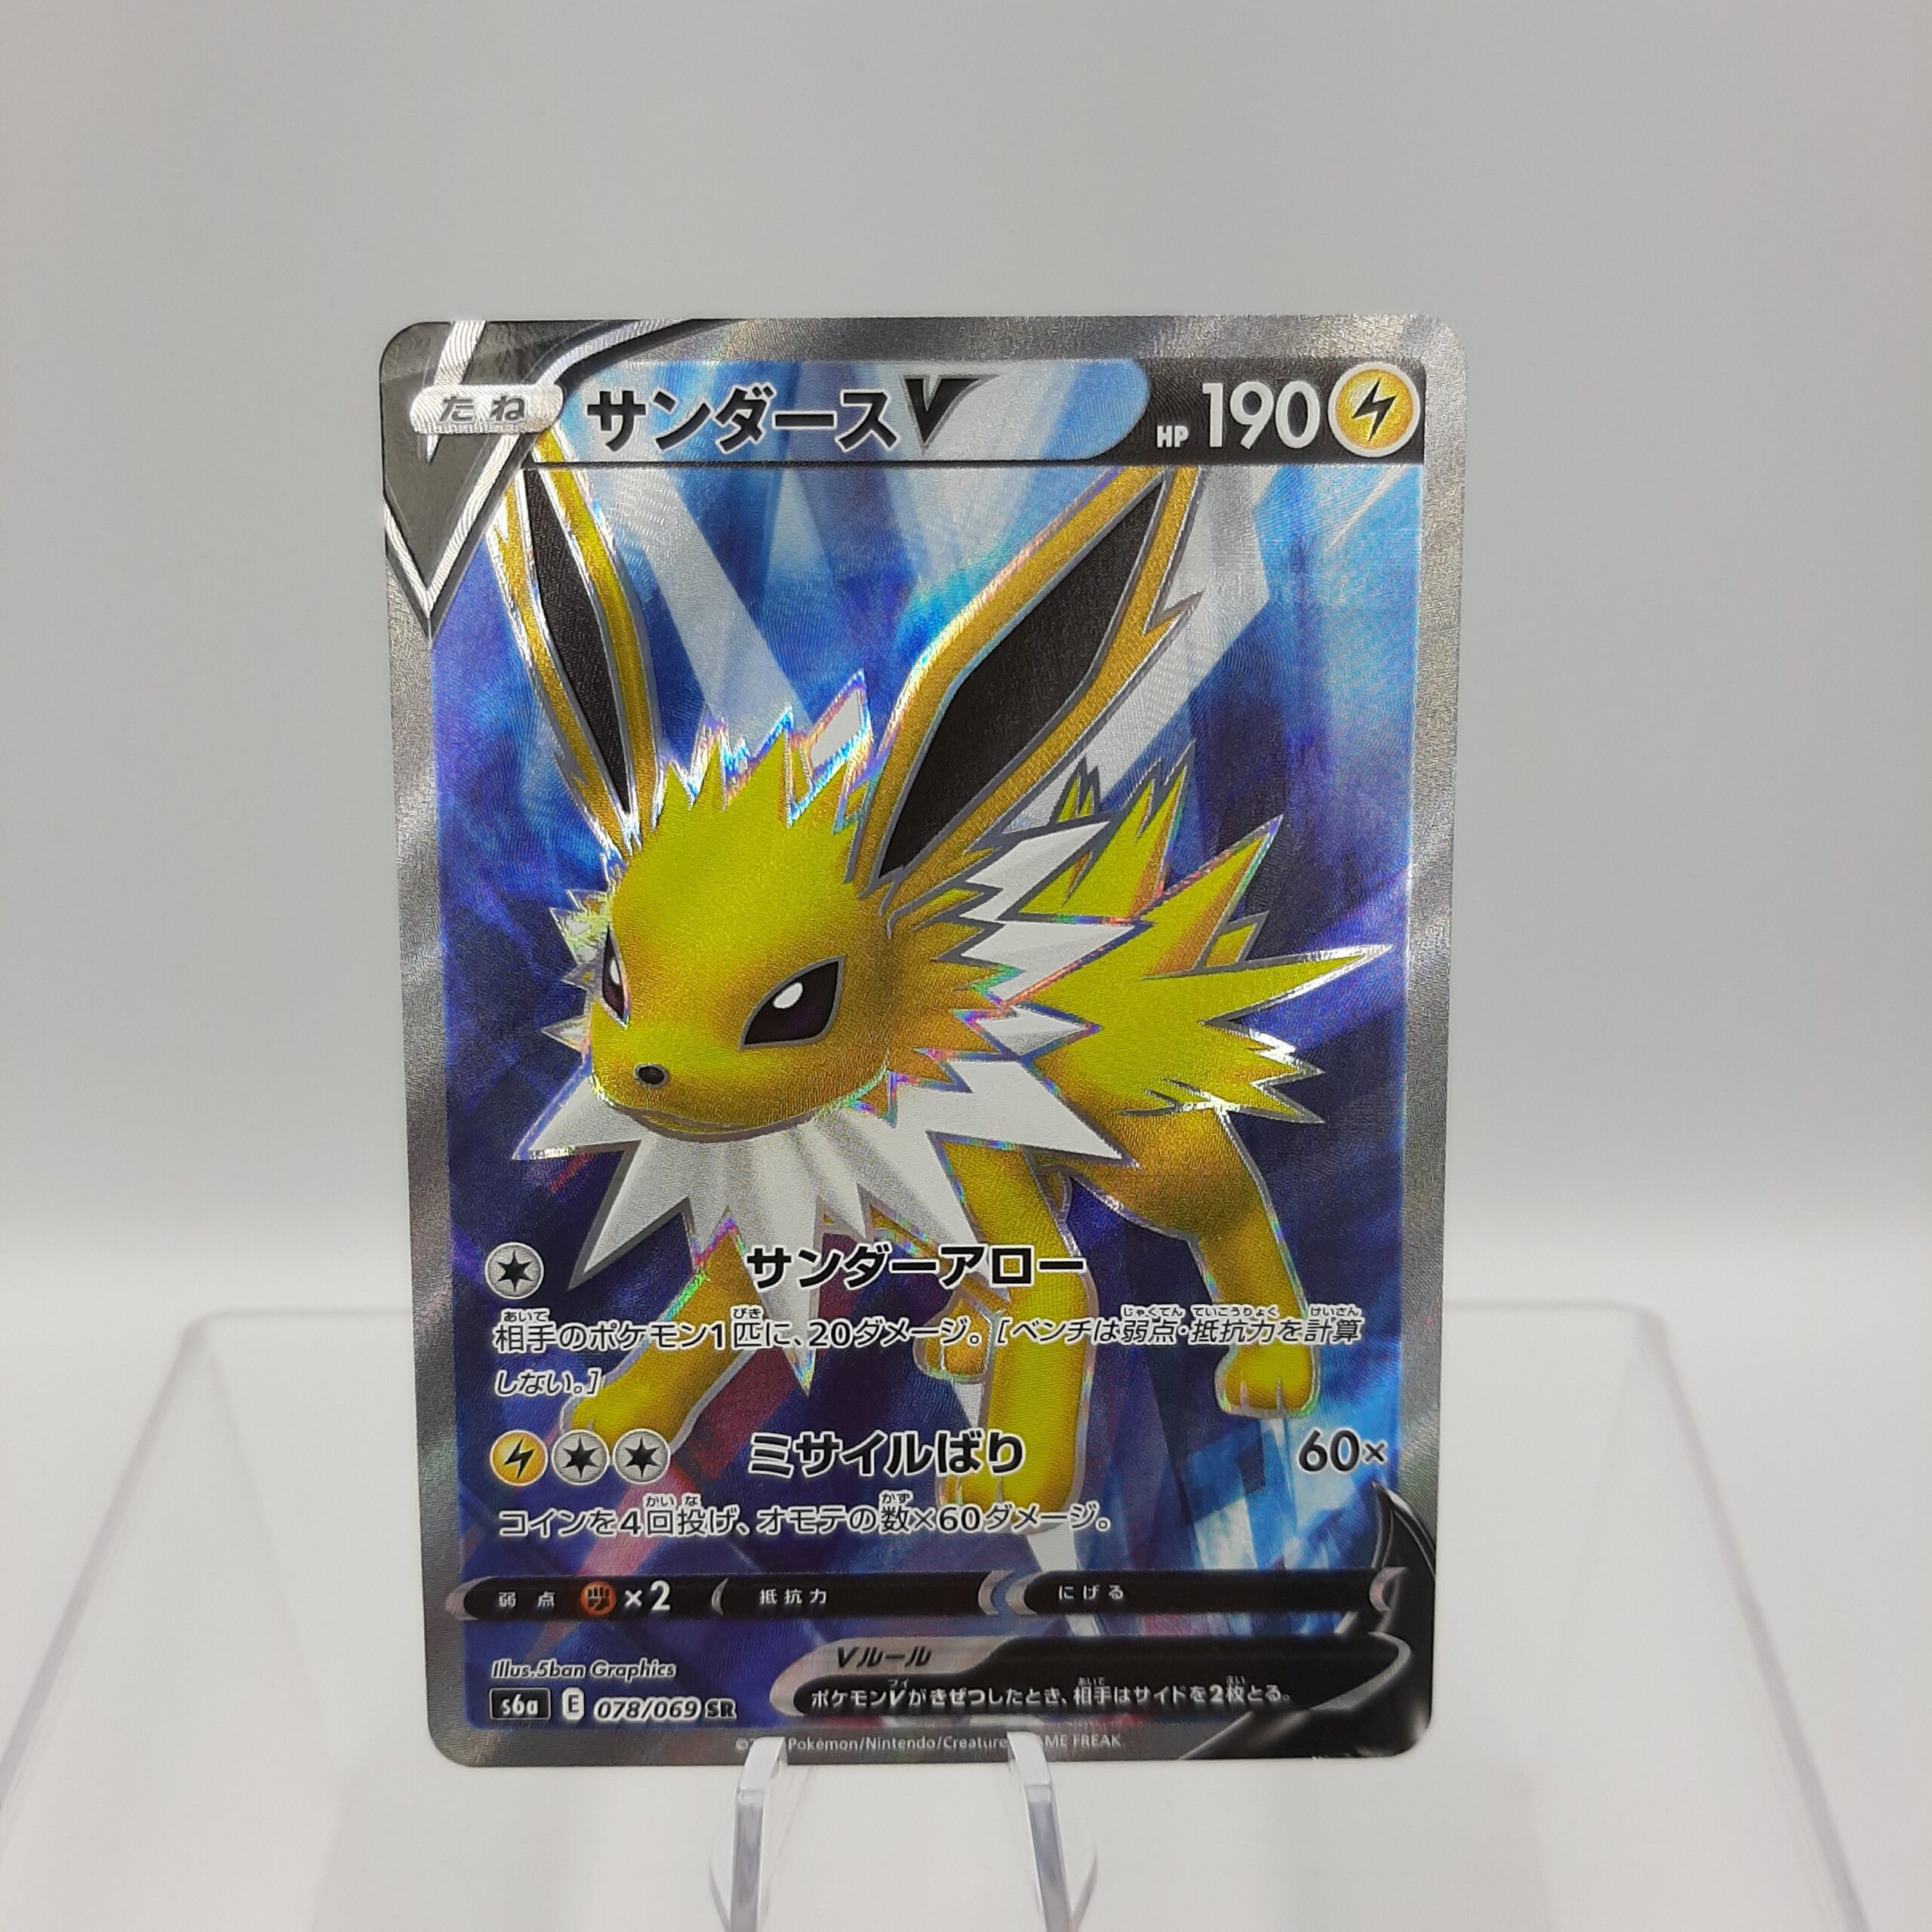 Carte Pokémon japonais - Voltali V/ 078/069 - Eevee heroes - SR - full art  - ultra rare - s6a - jap